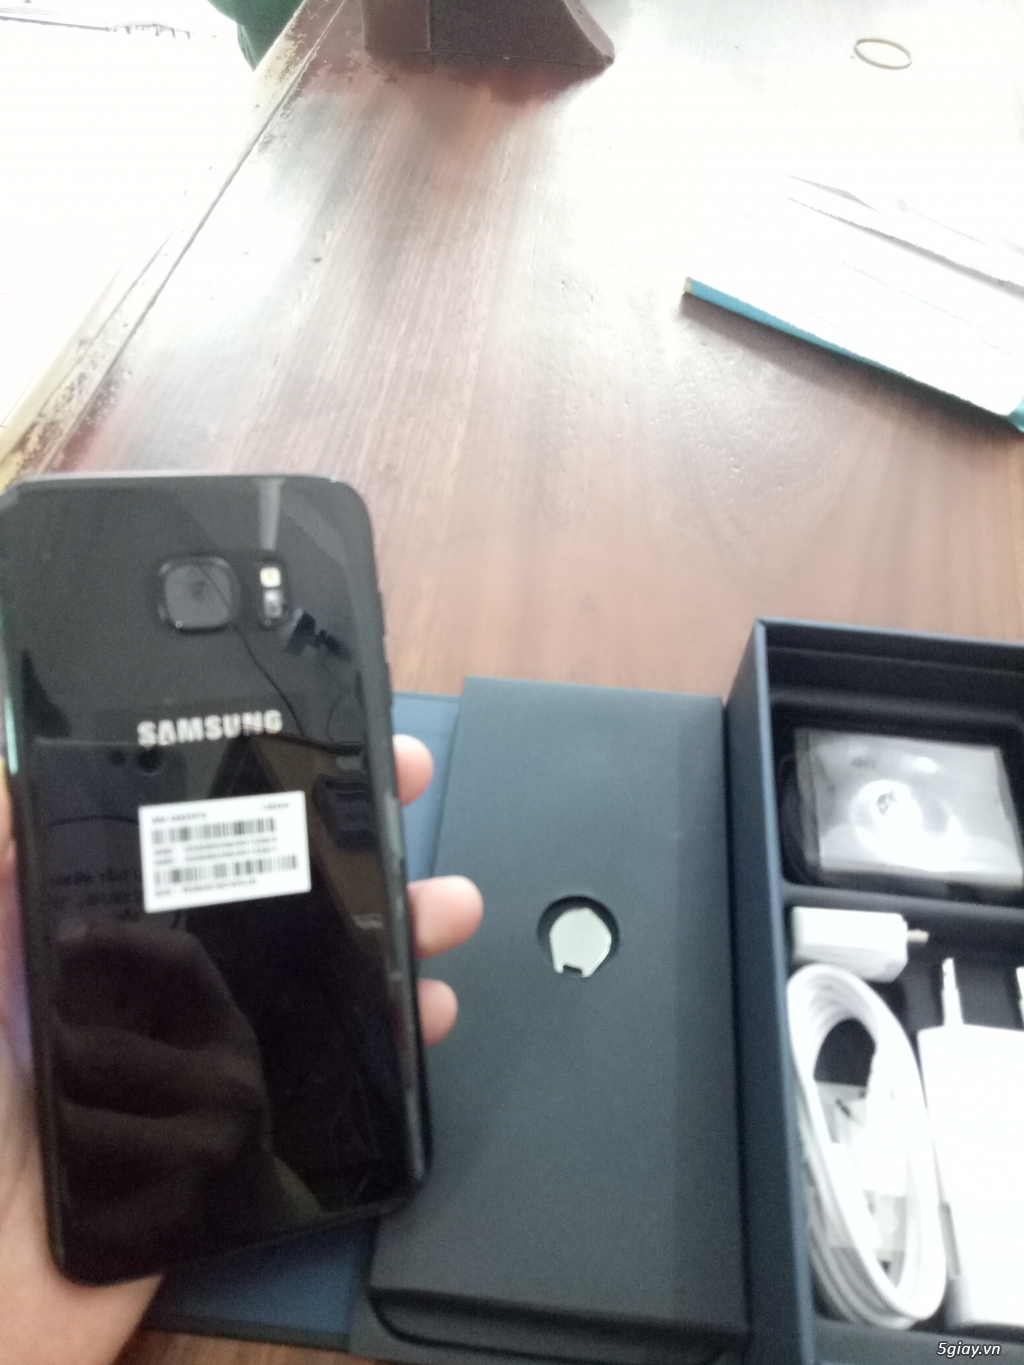 Bán Samsung Galaxy S7 Edge Black Pearl 128GB Full box chưa sờ tay - 1